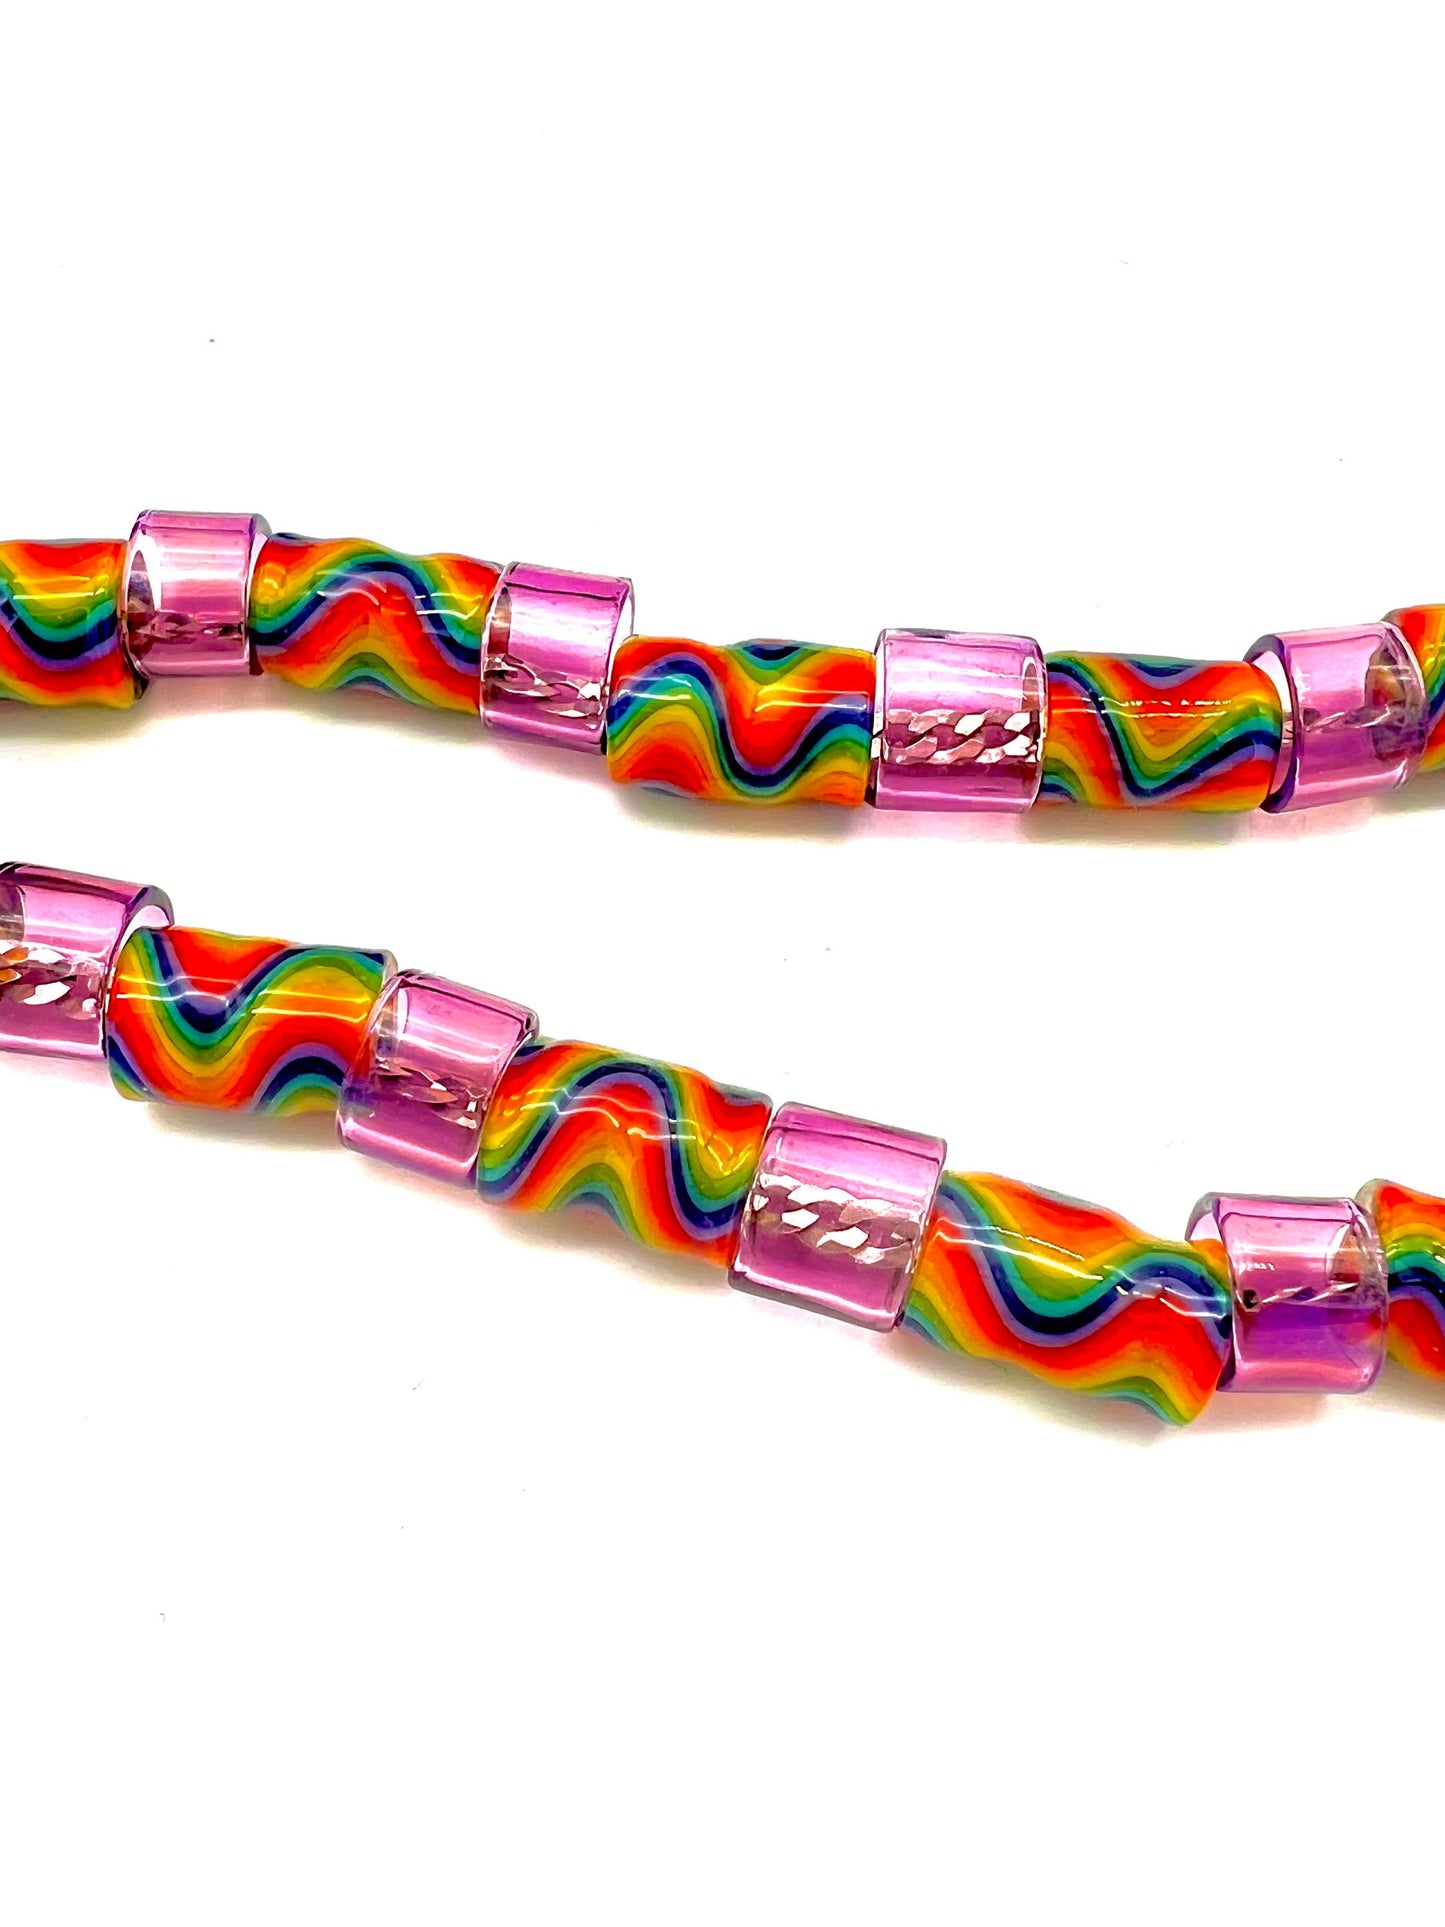 Handmade Heady WavyGravy Rainbow WigWag with Karmaline and Stargazer Accents Full Bead Jewelry Pendant Interstellar Set #1 with Centerpiece